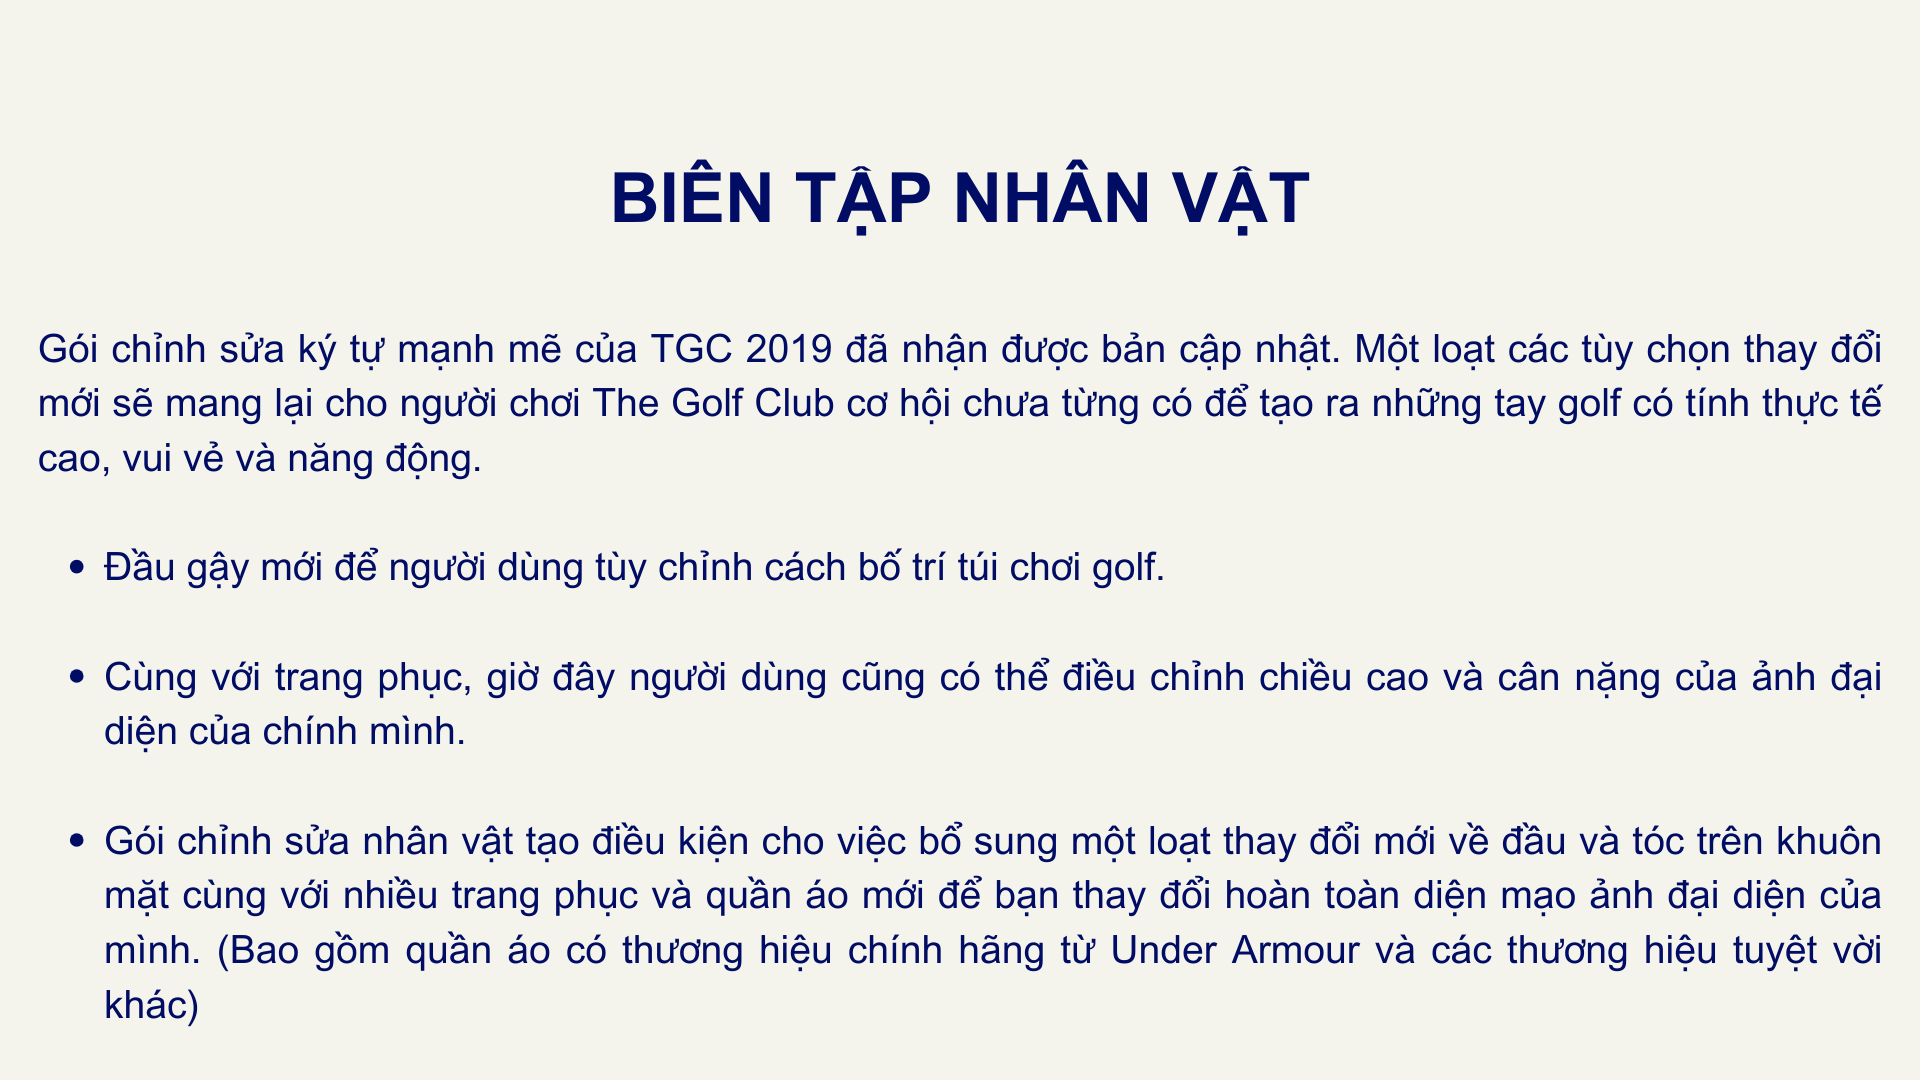 Phần mềm golf TGC 2019